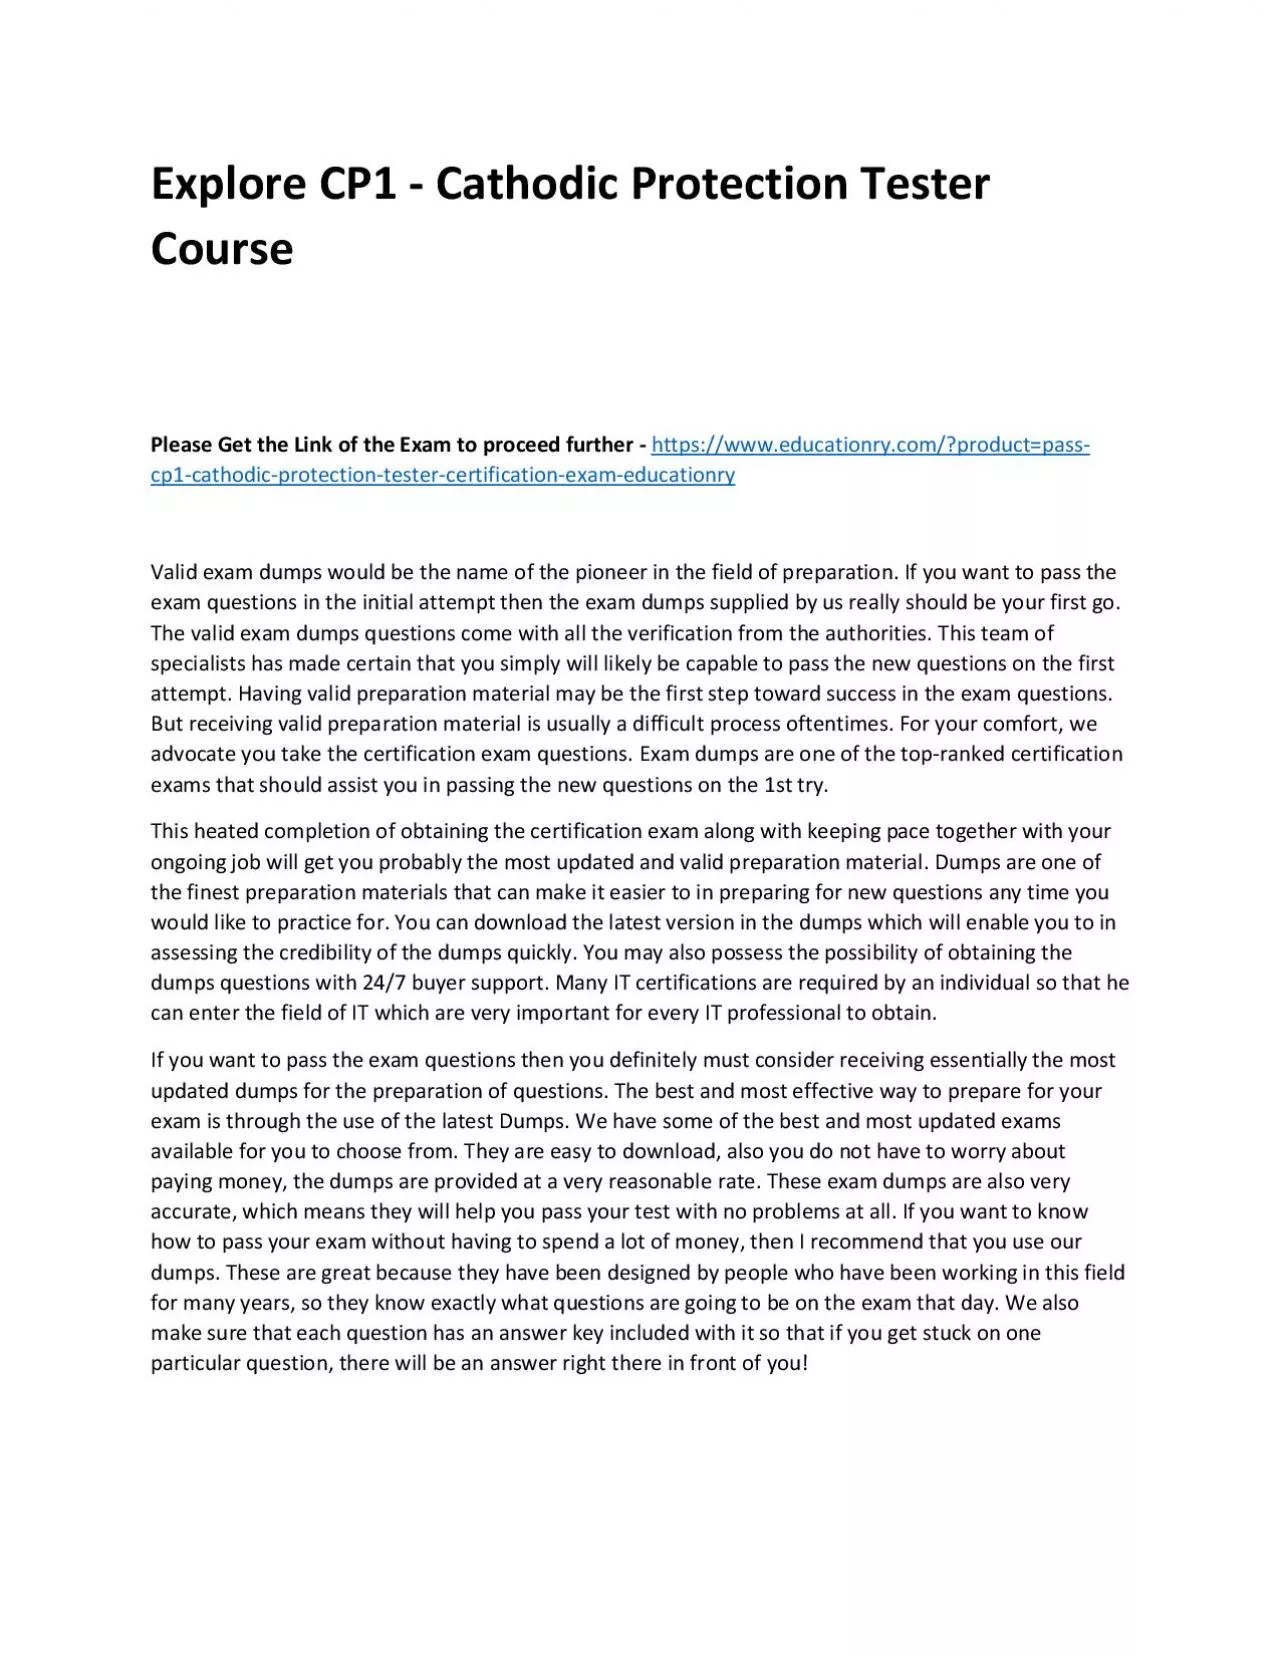 Explore CP1 - Cathodic Protection Tester Practice Course